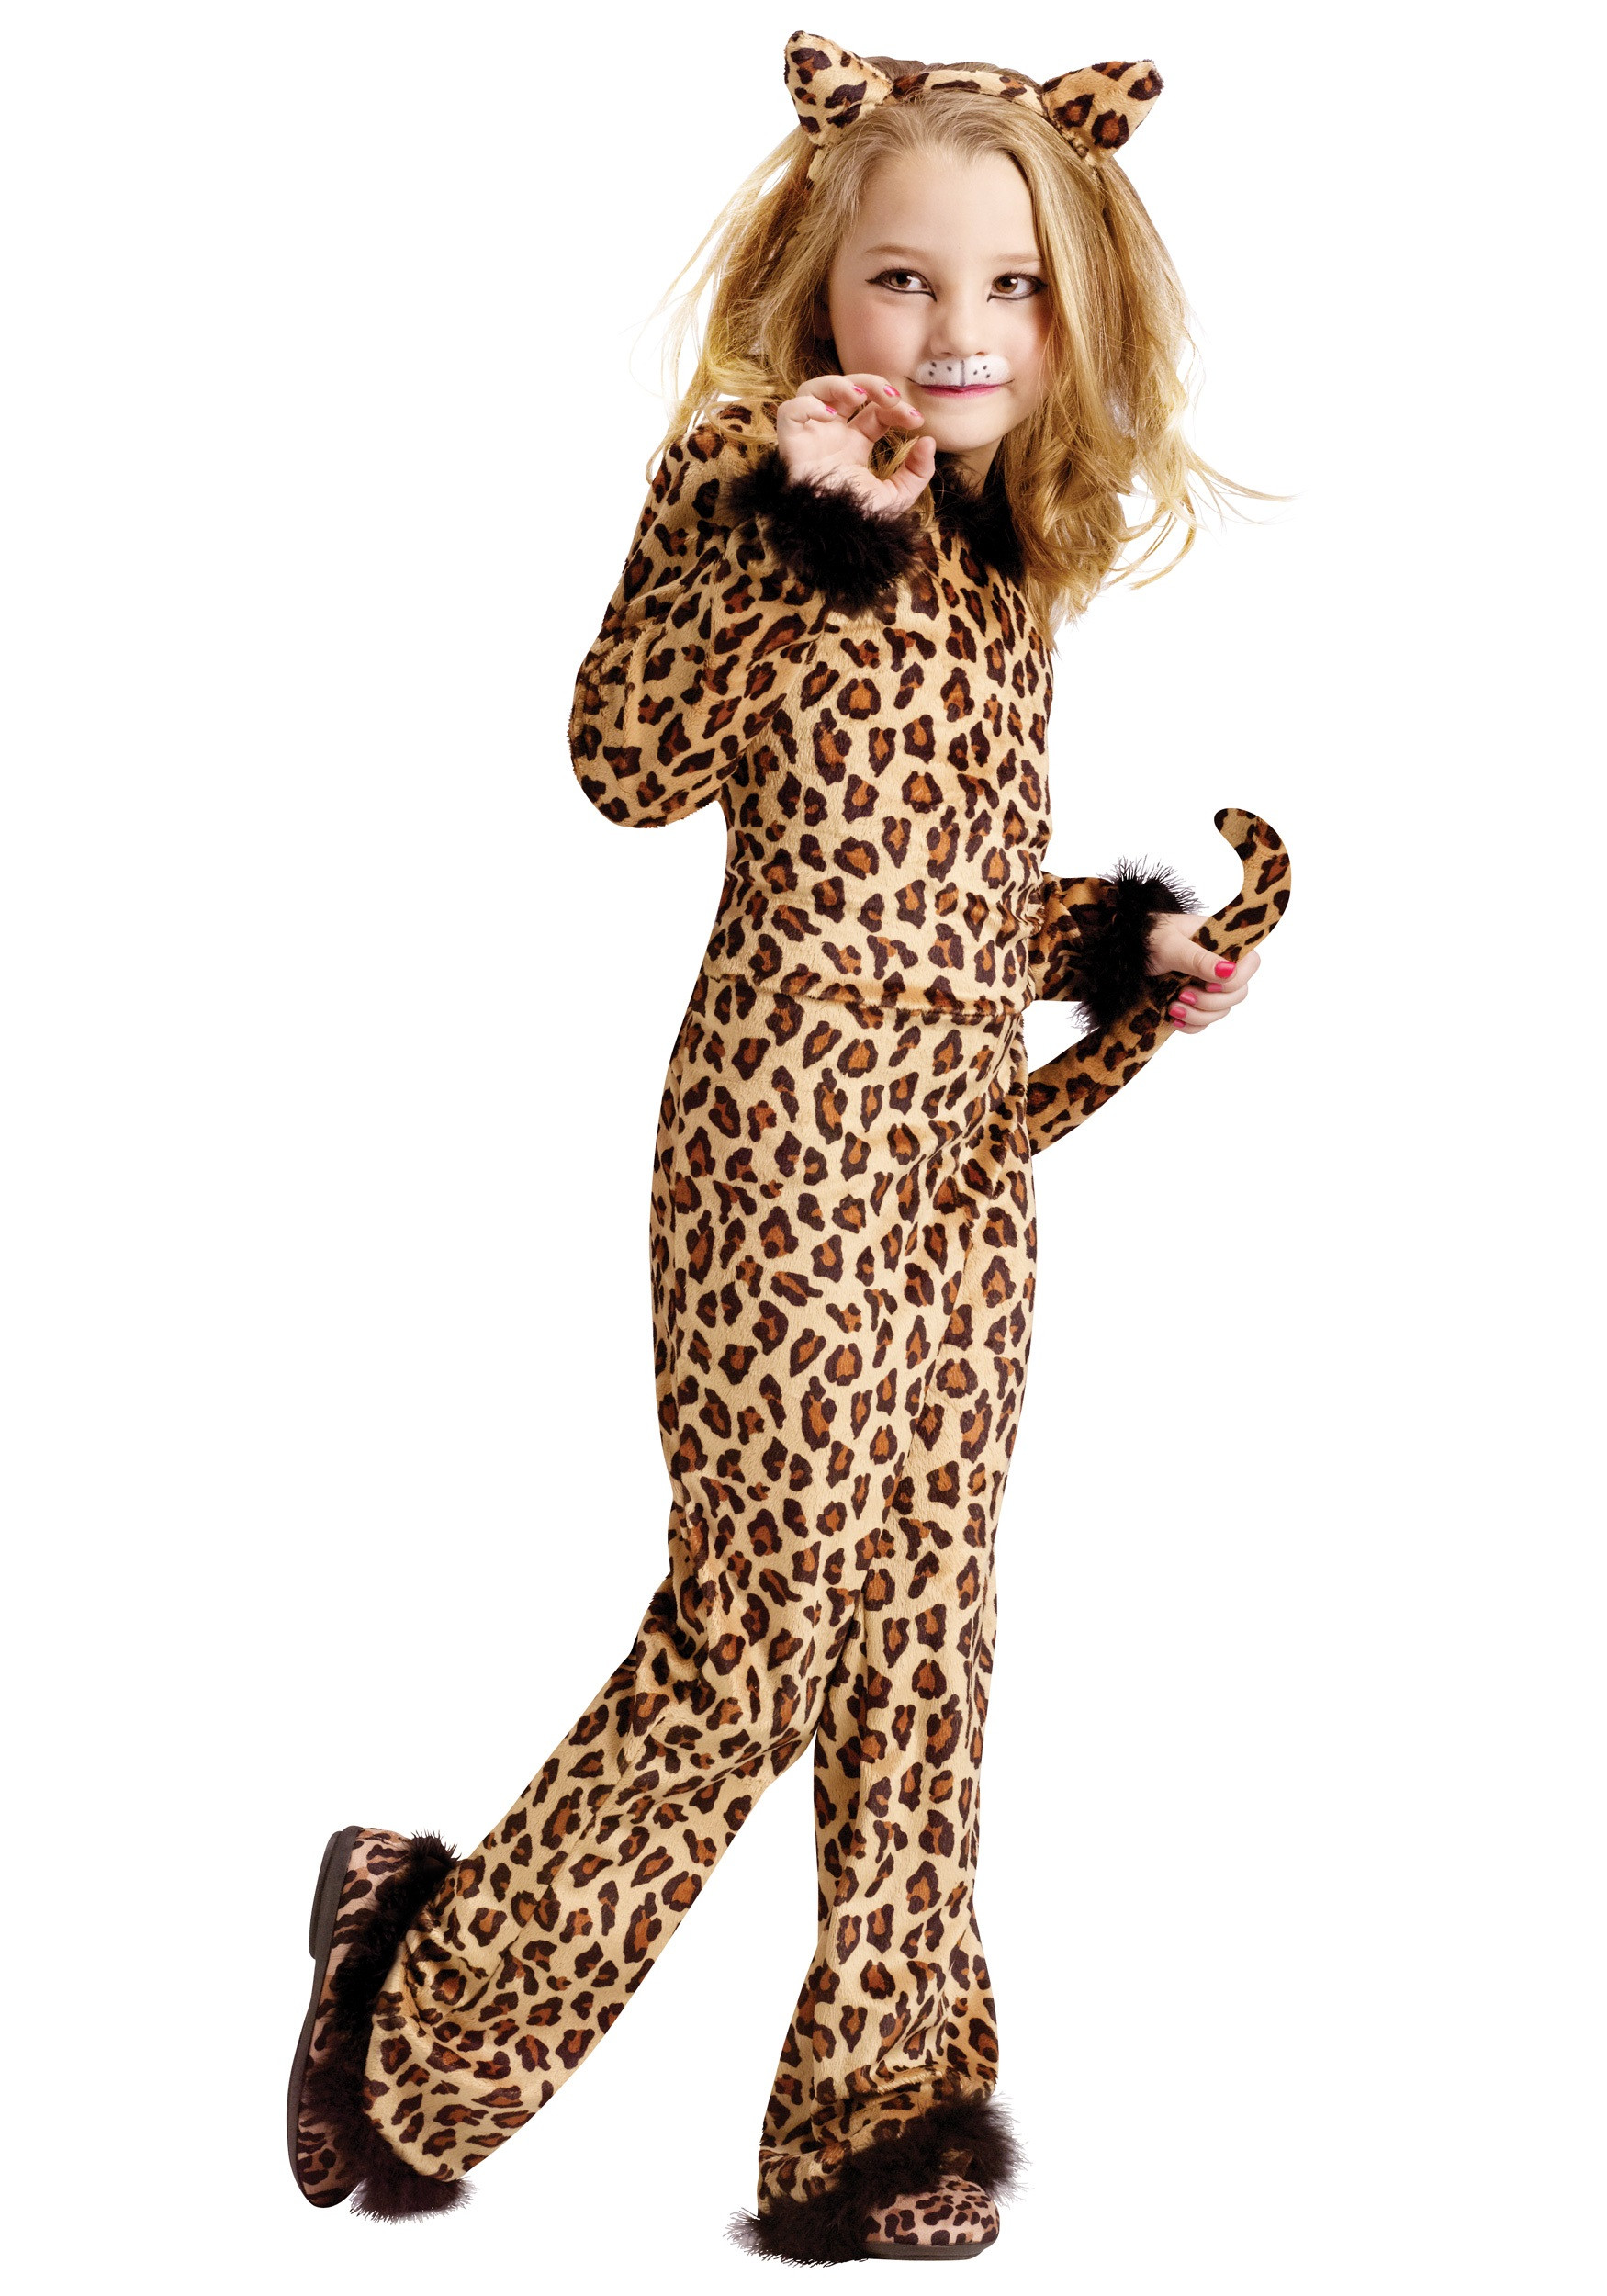 DIY Cheetah Costumes
 Child Pretty Leopard Costume